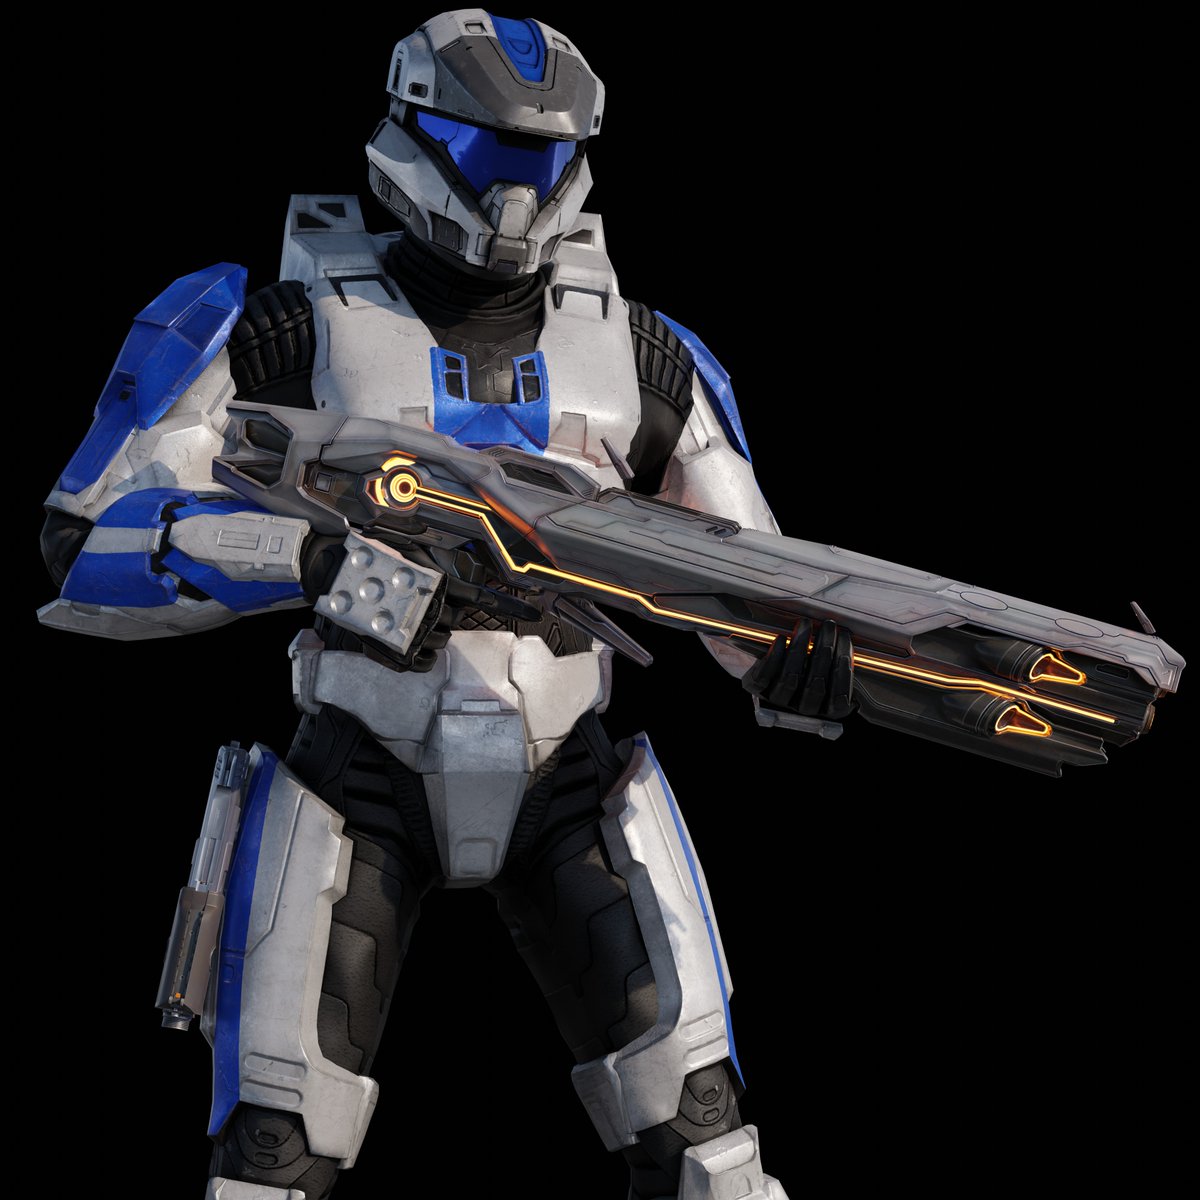 Bungie-era armor + 343-era weaponry = Best of both worlds. #Halo #Blender